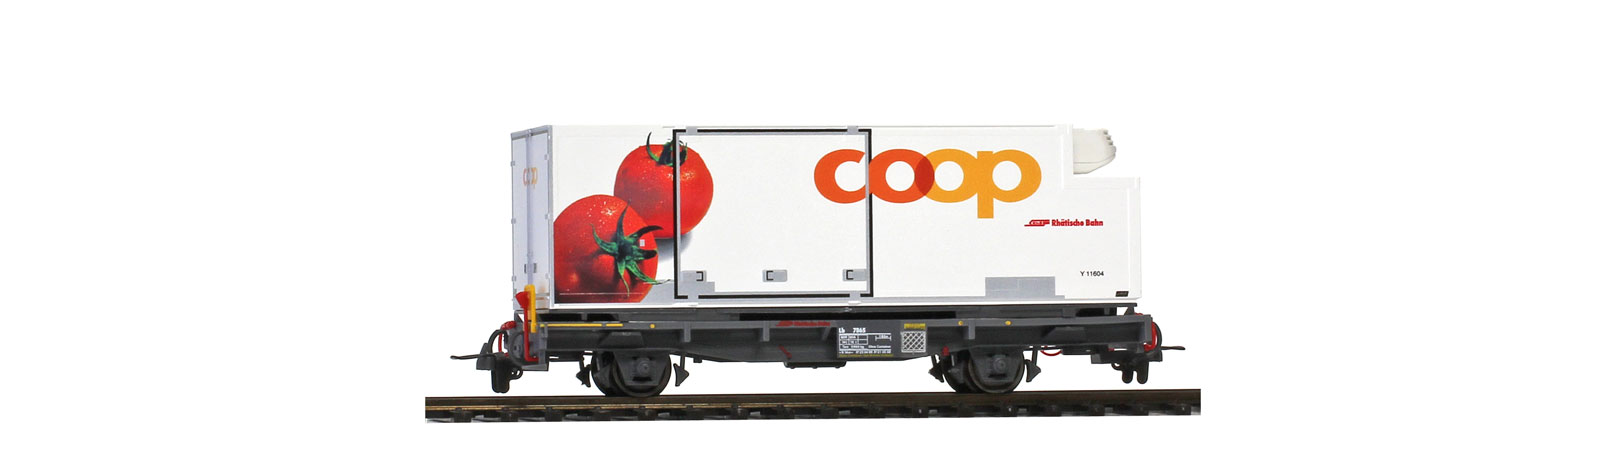 BEMO 2269 120 RhB Lb-v 7881 Container Car 'Coop' Tomato